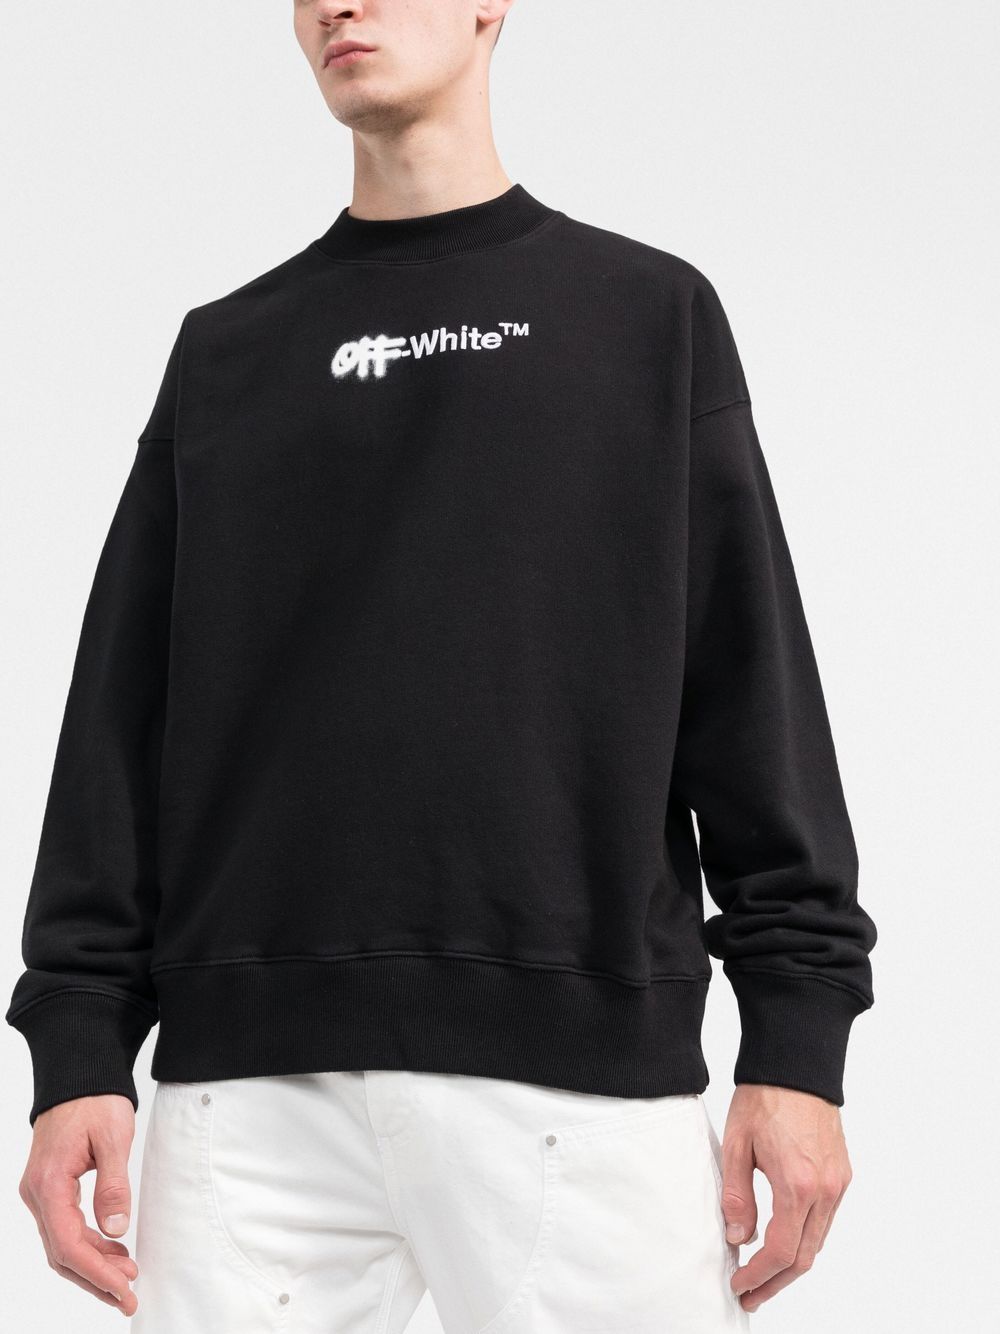 Black/white embroidered logo crew-neck sweatshirt